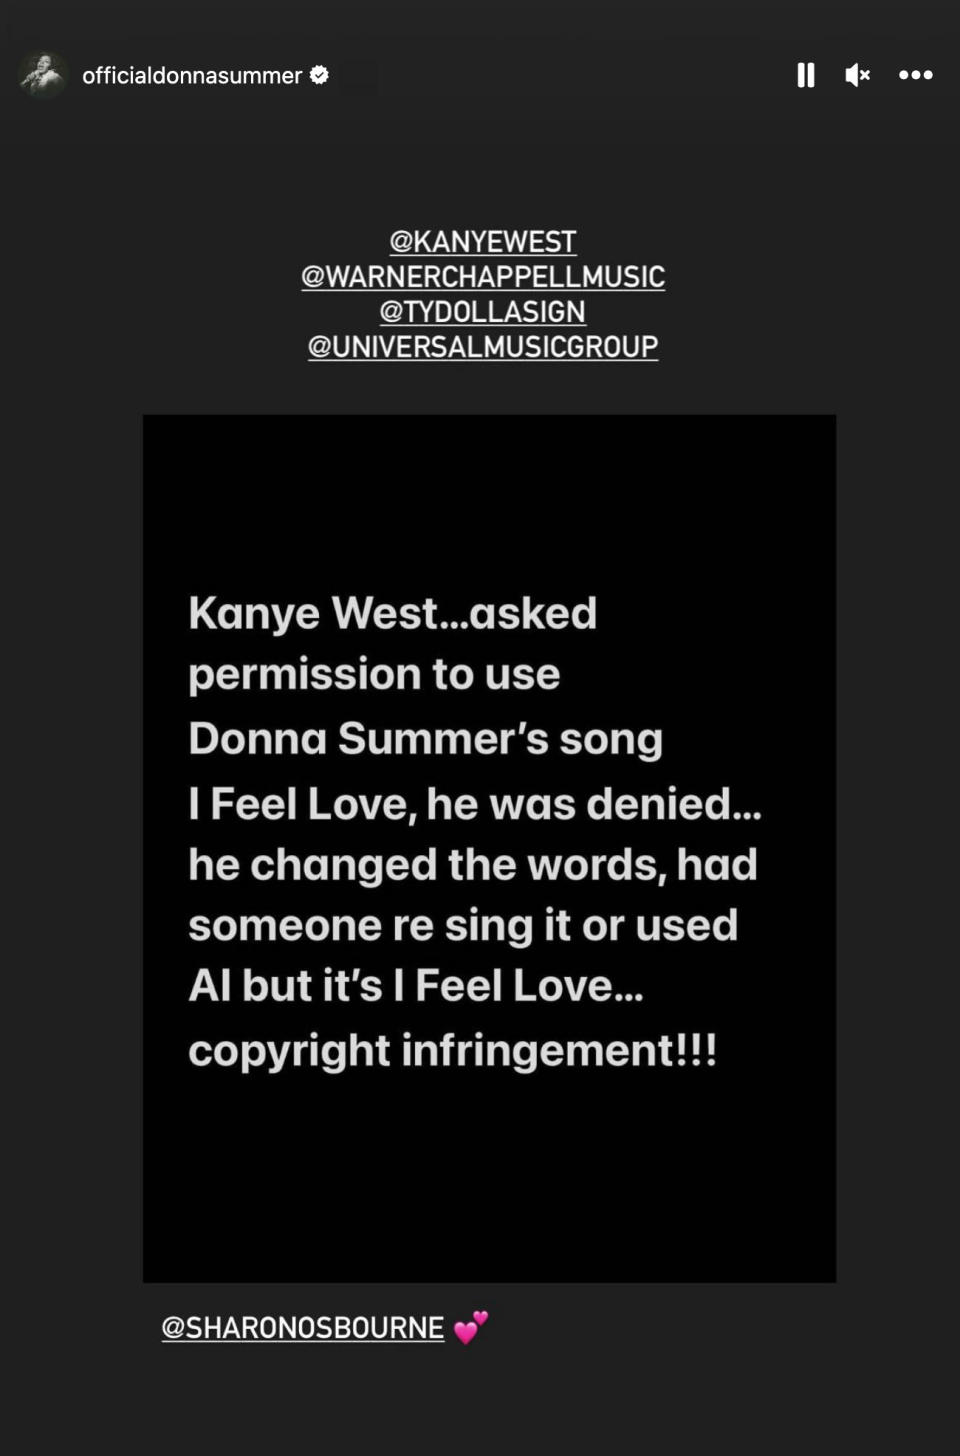 Statement from the Donna Summer estate